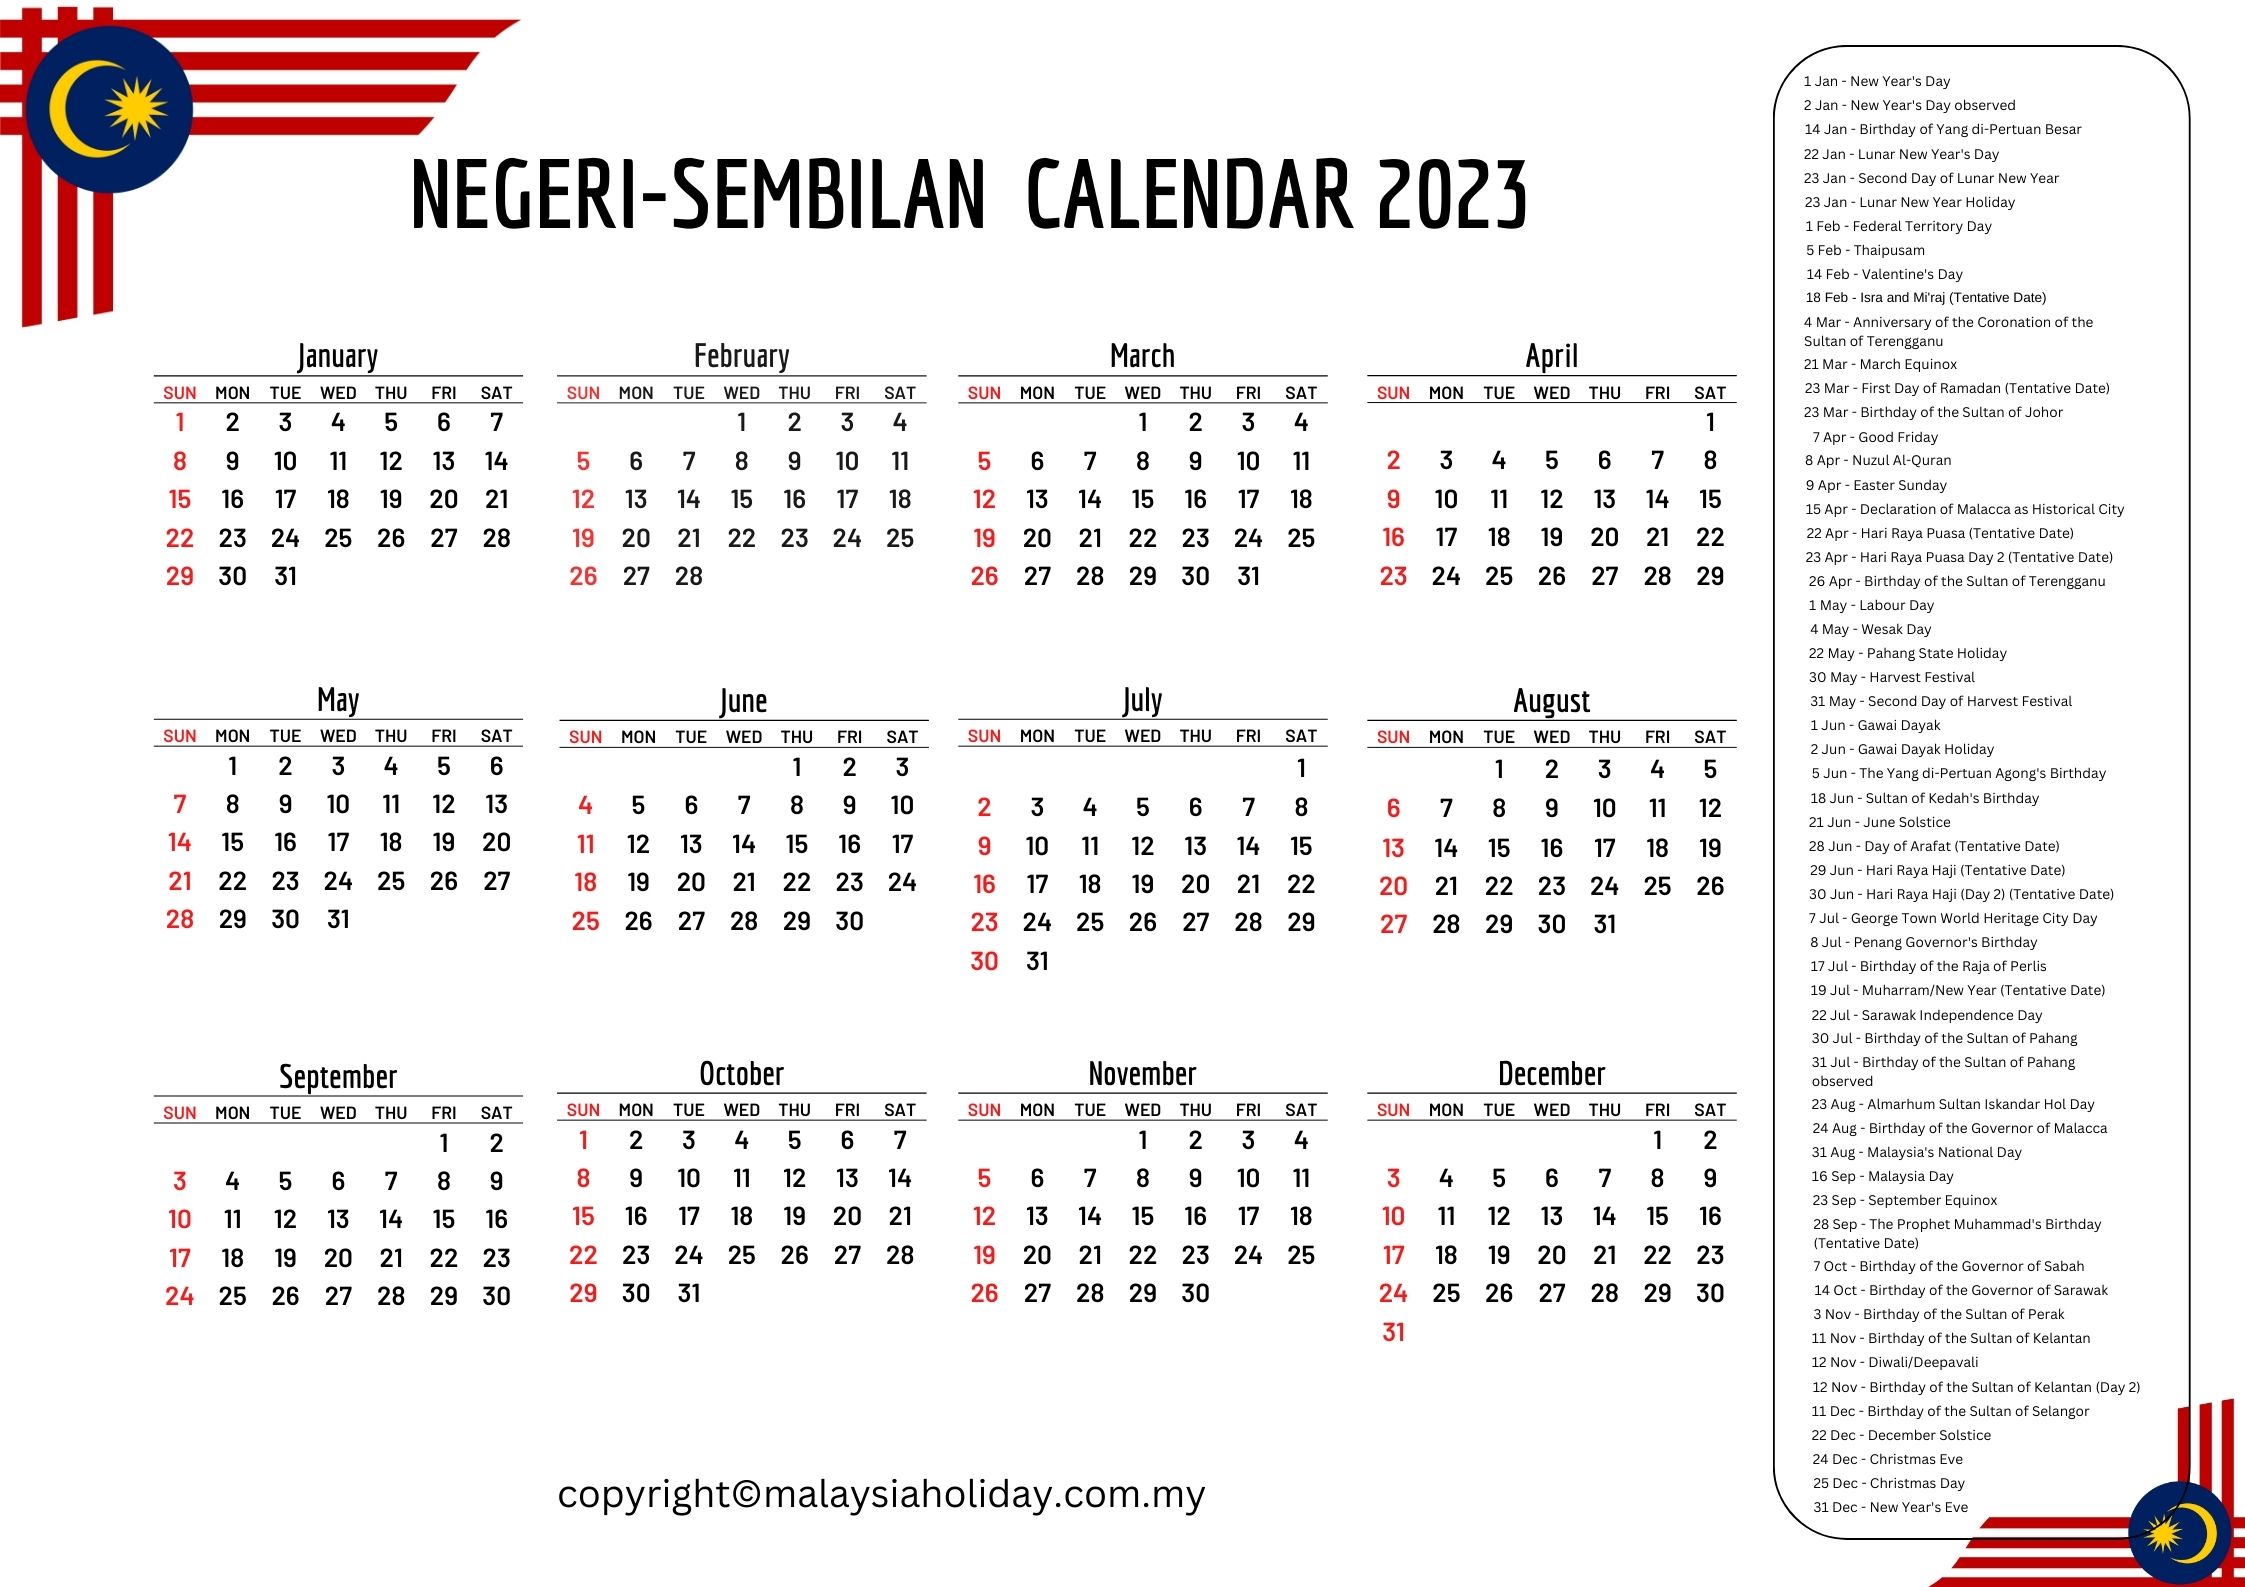 Negeri Sembilan Public Holidays 2023